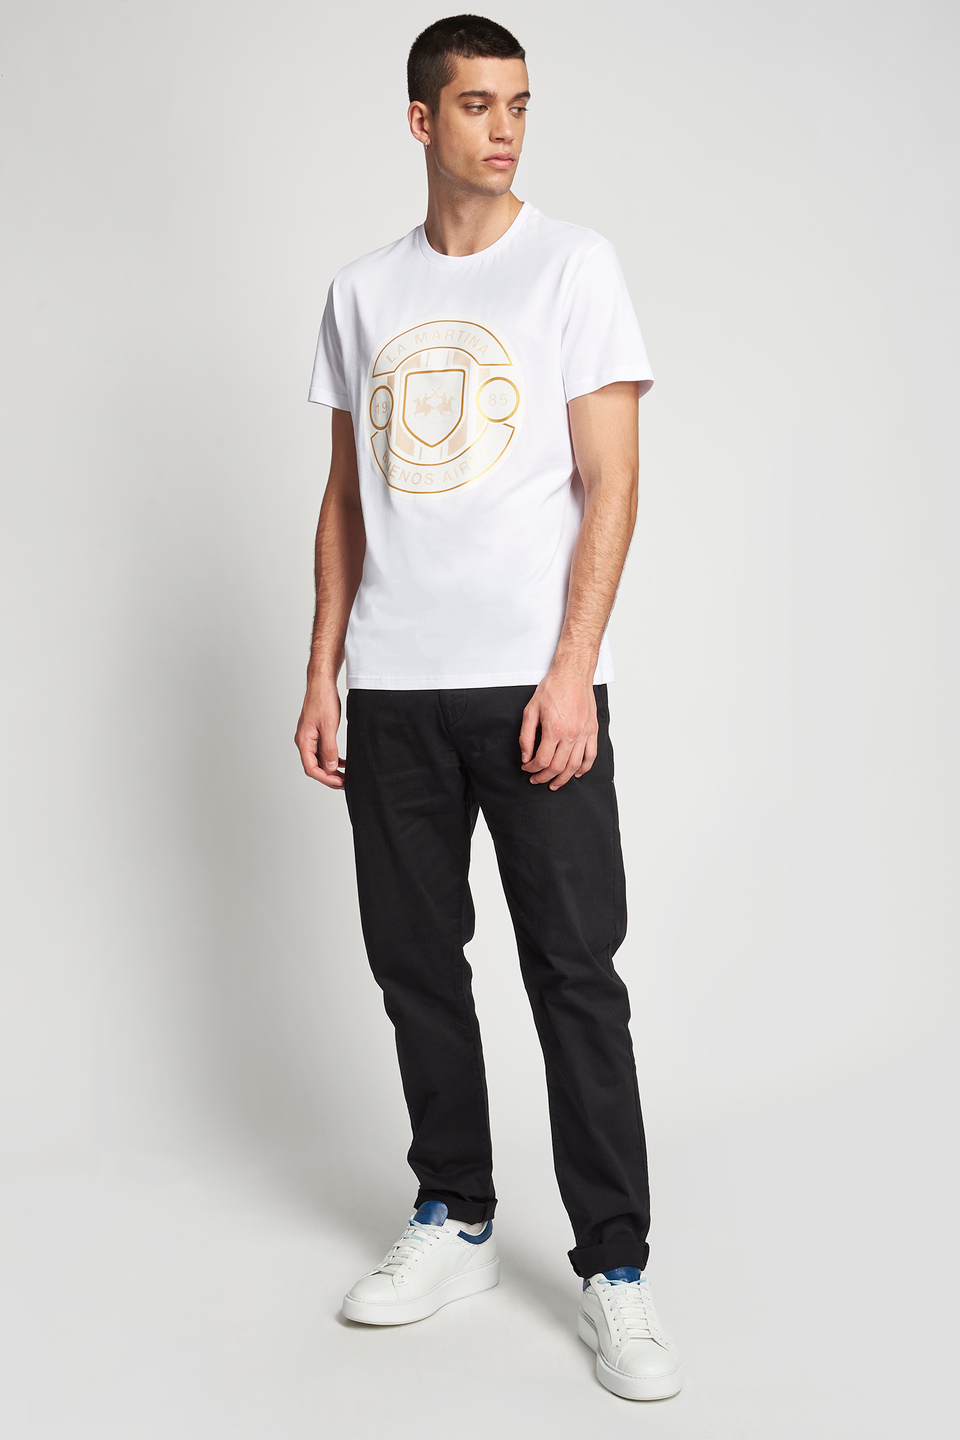 Printed cotton T-shirt - La Martina - Official Online Shop